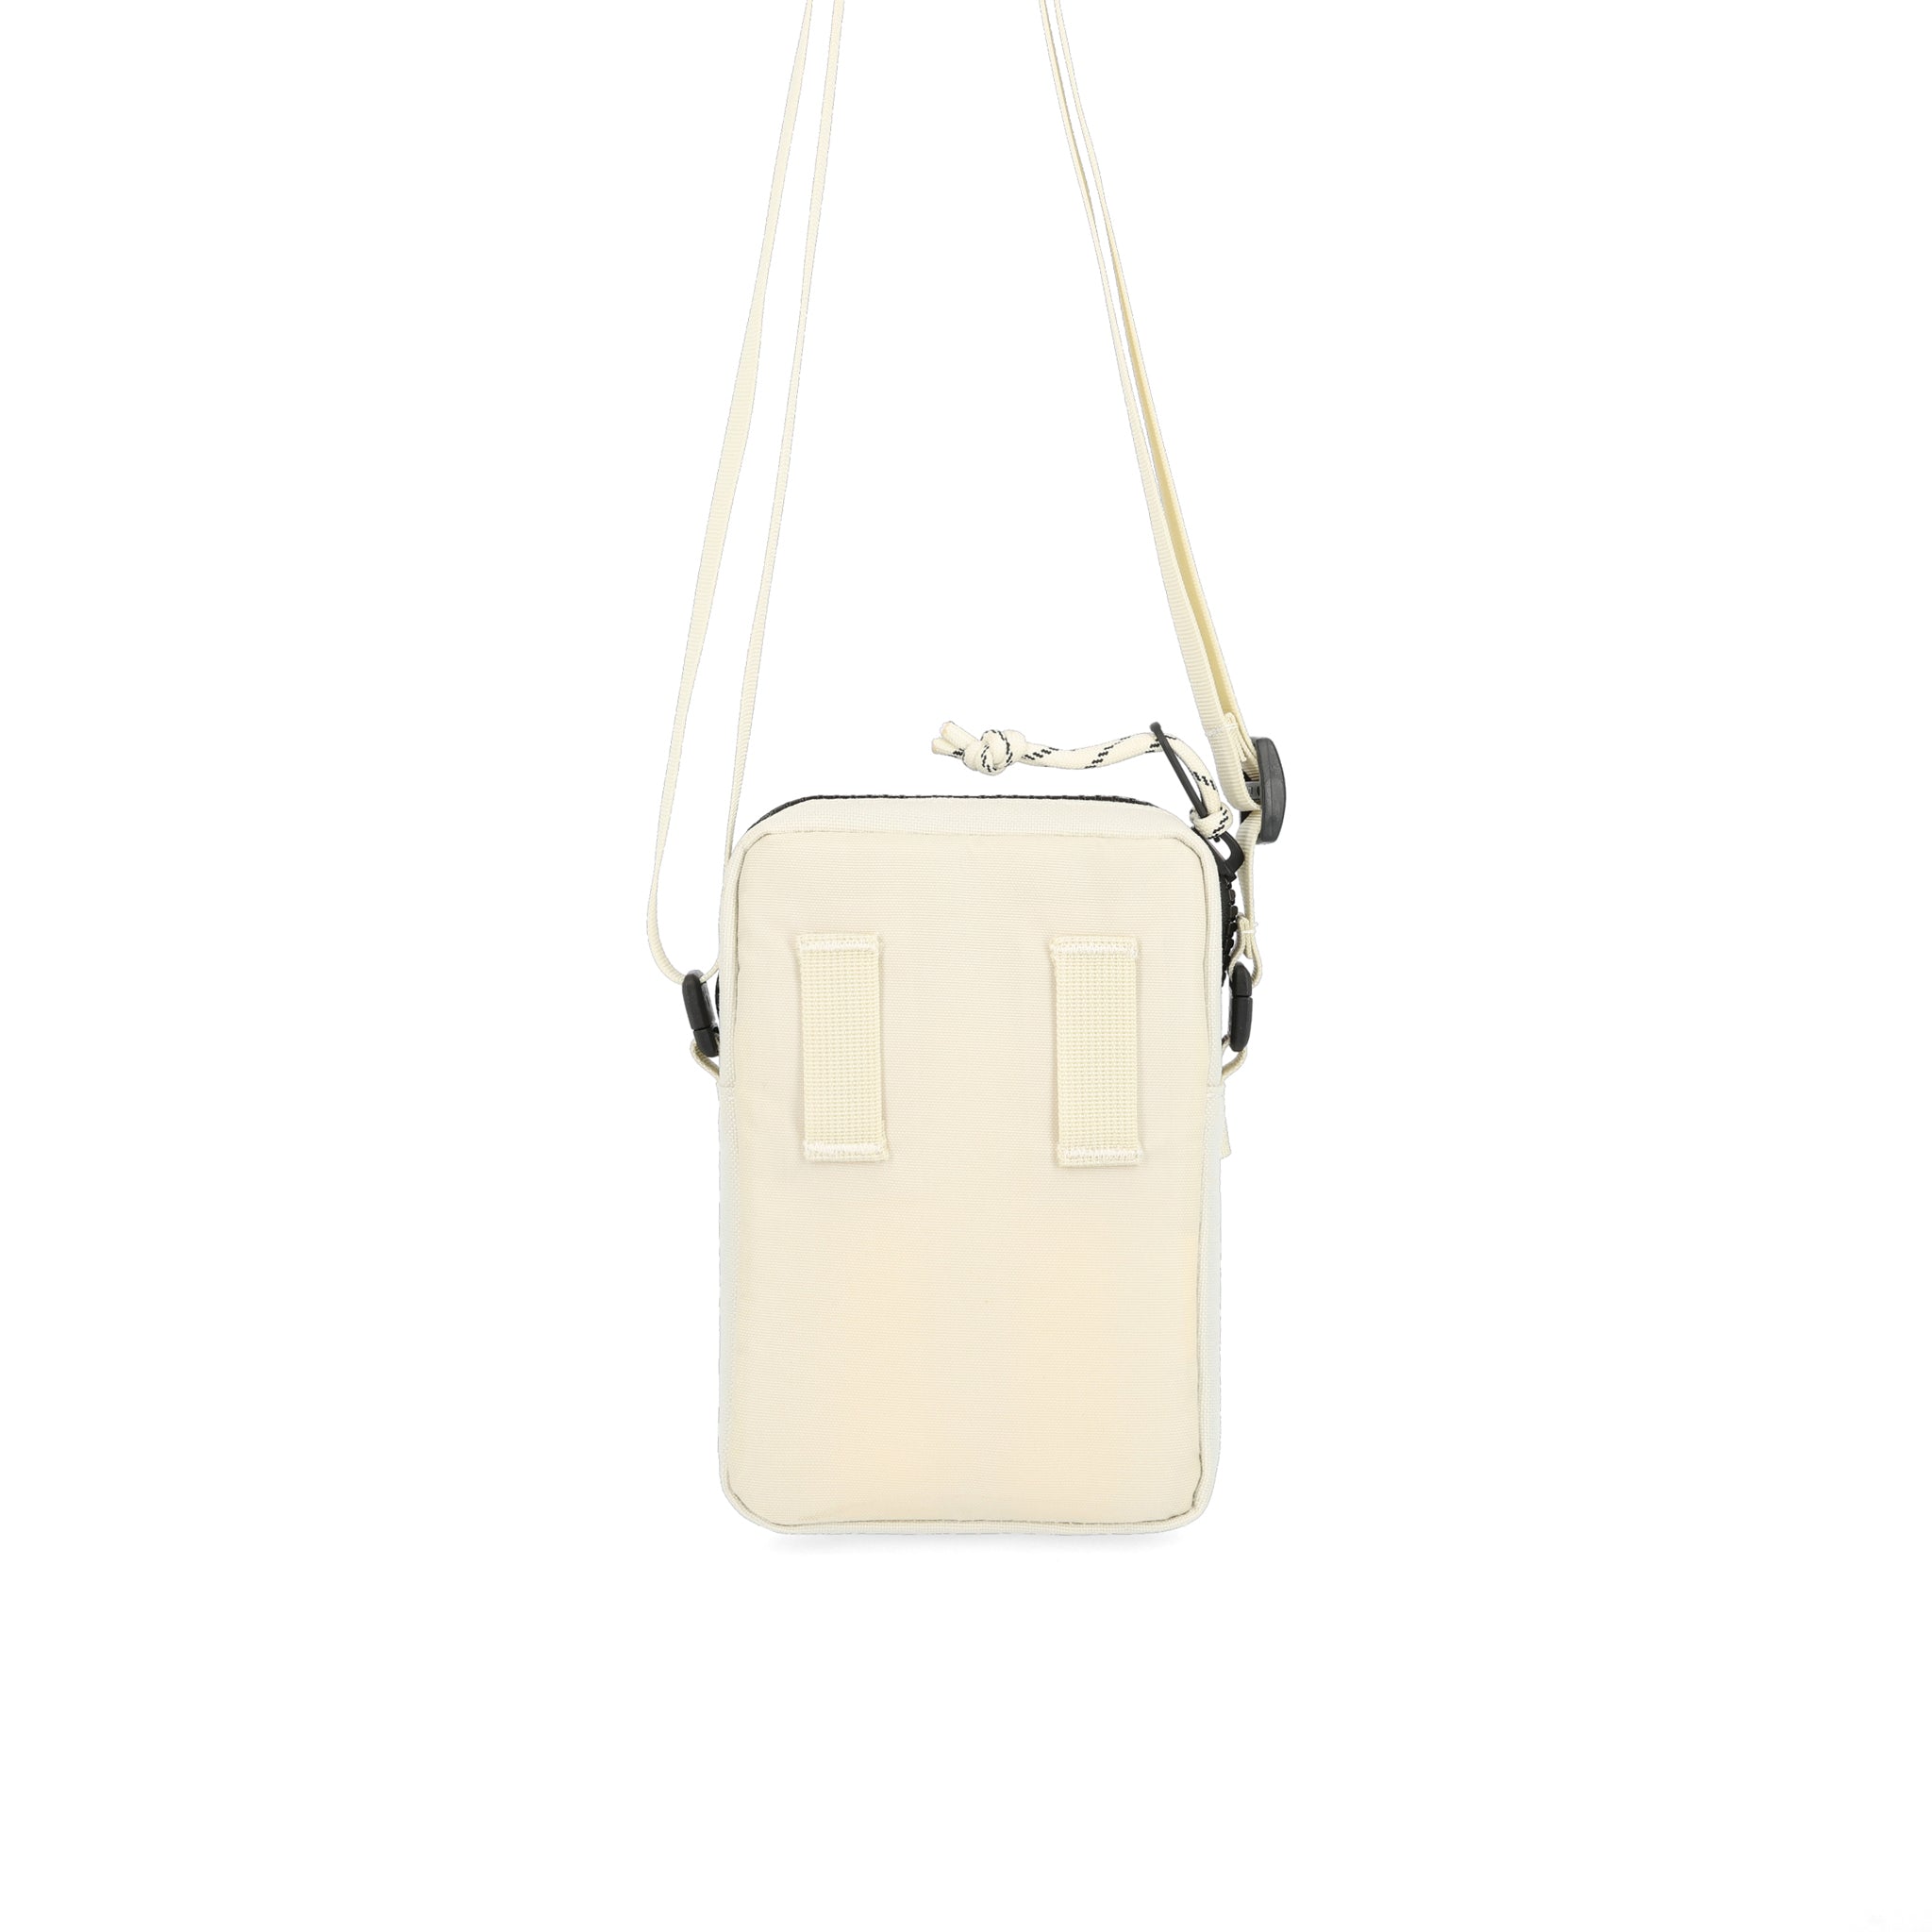 Topo Designs Mini Shoulder Bag Review